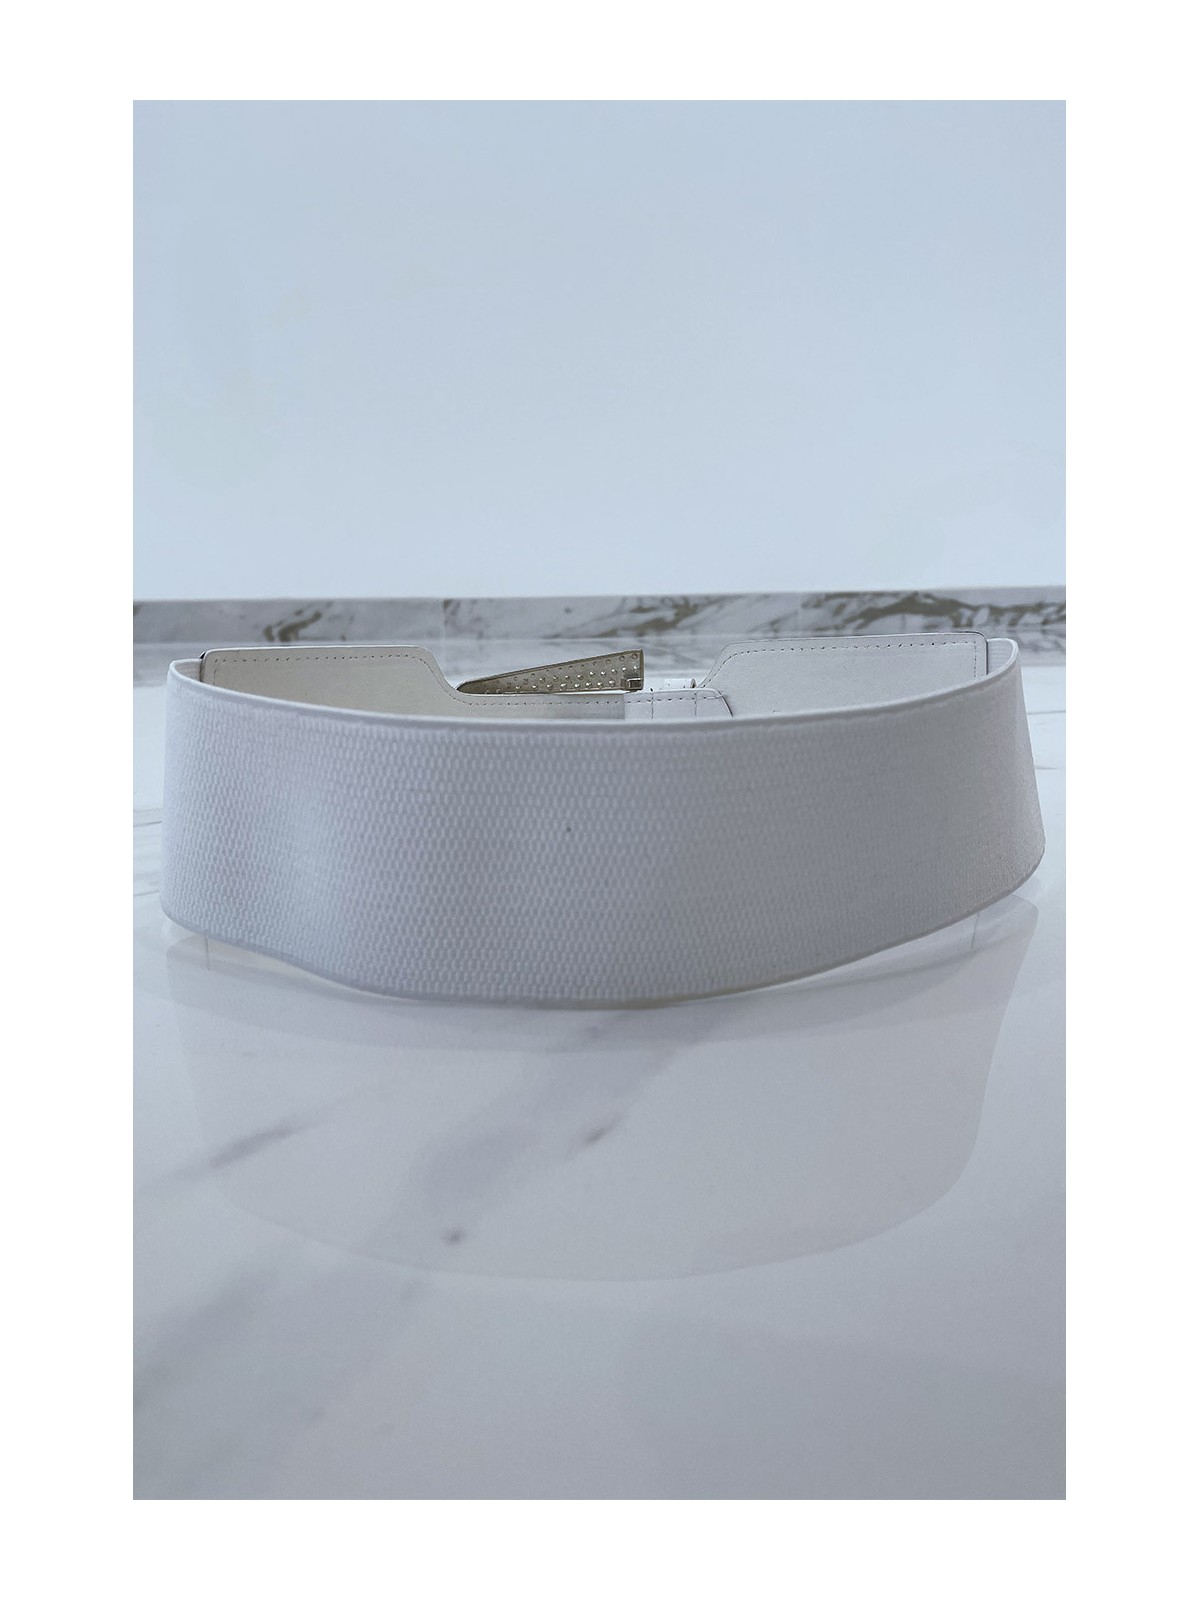 Grosse ceinture blanche bi-matière à bride métallisée et strass - 5